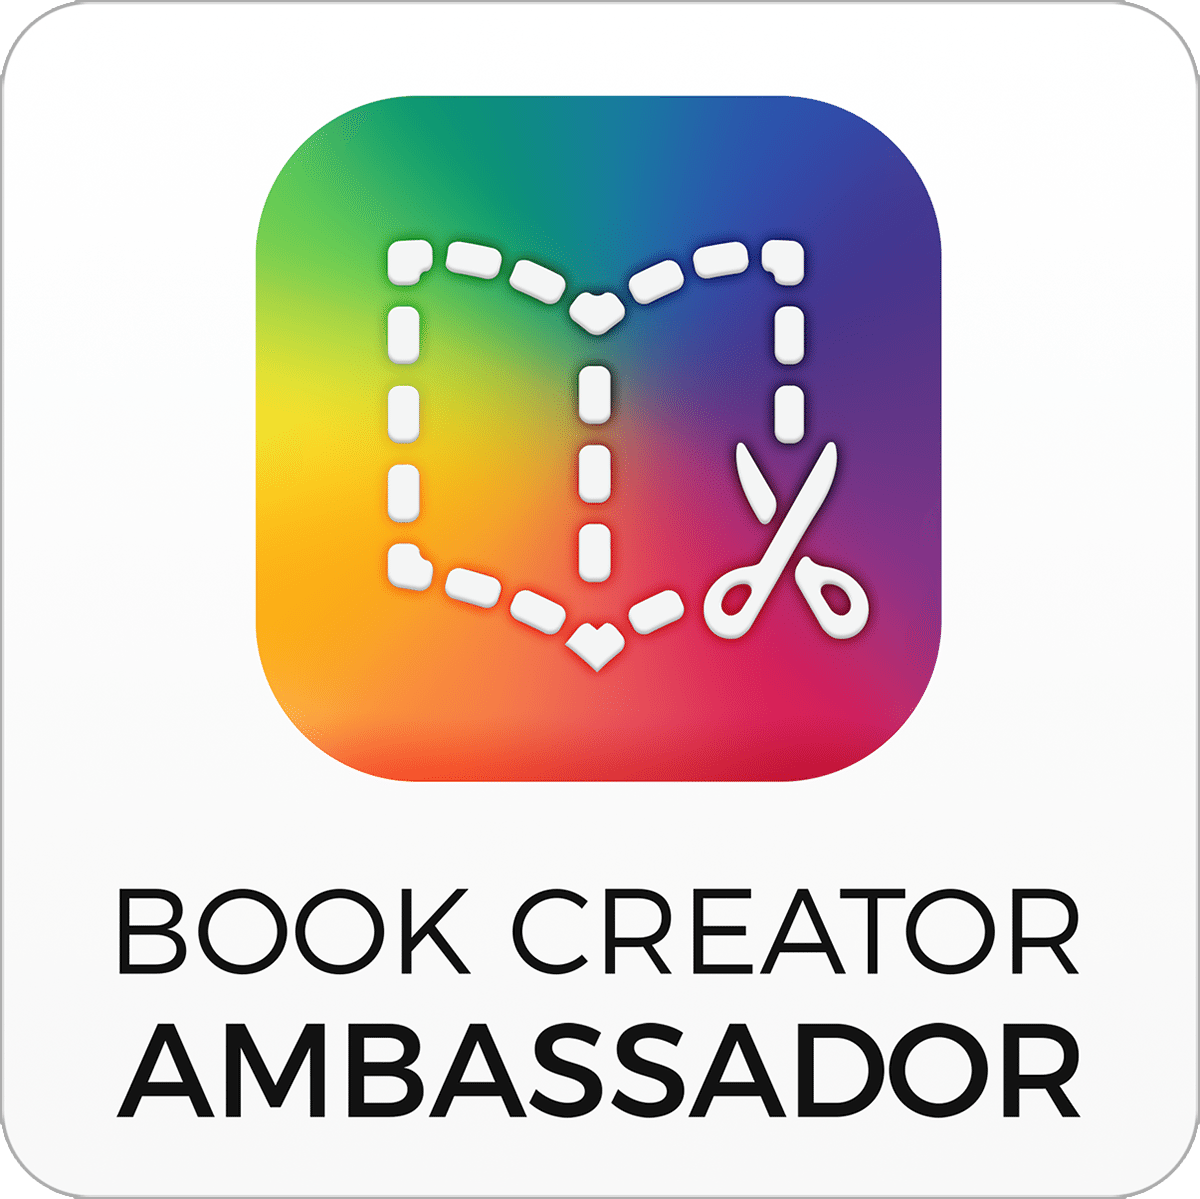 Book Creator Ambassador badge.